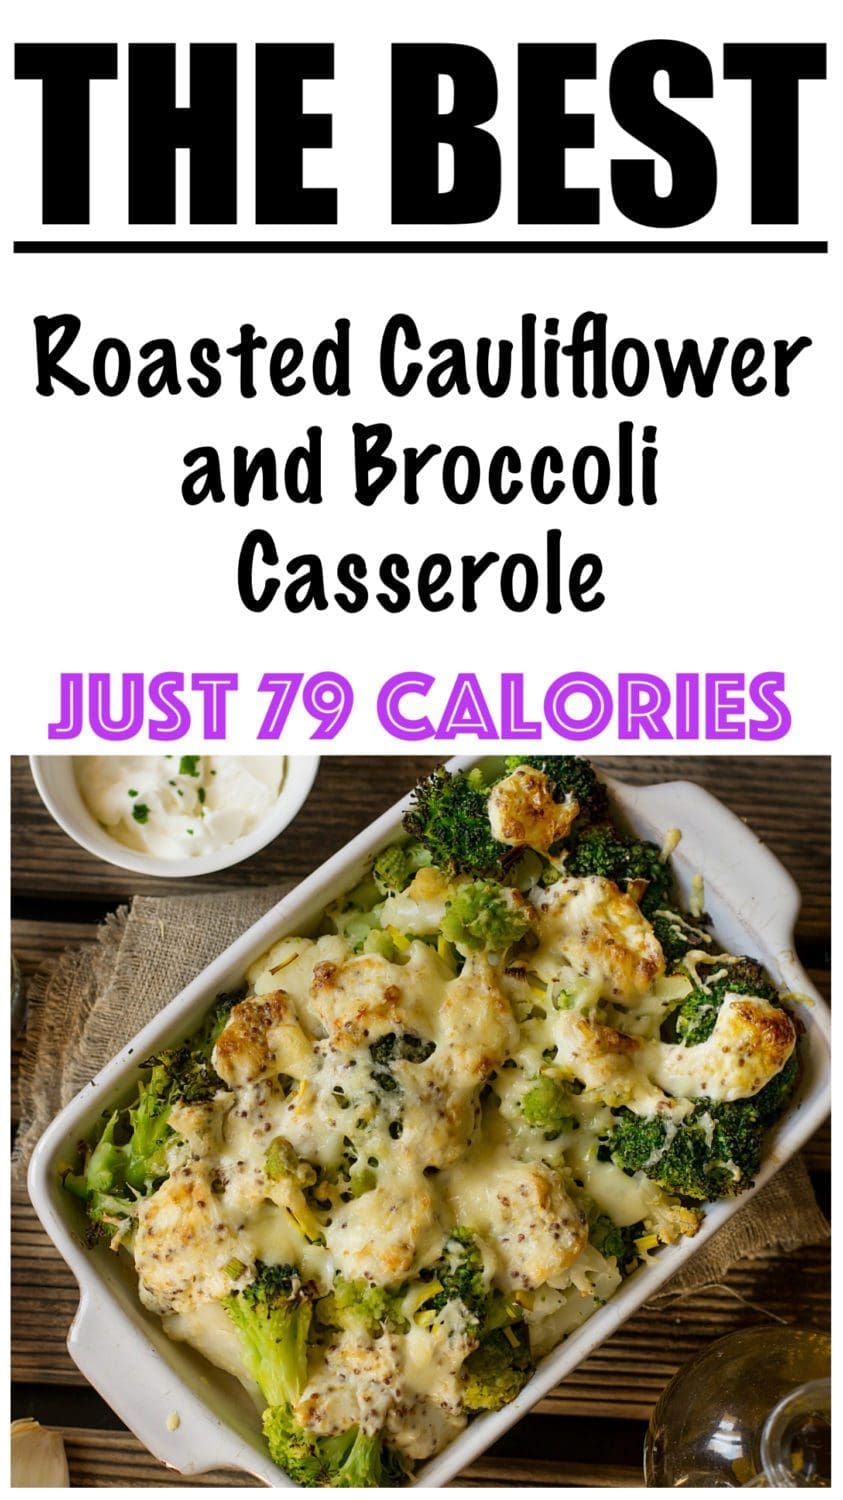 Roasted Cauliflower and Broccoli Casserole